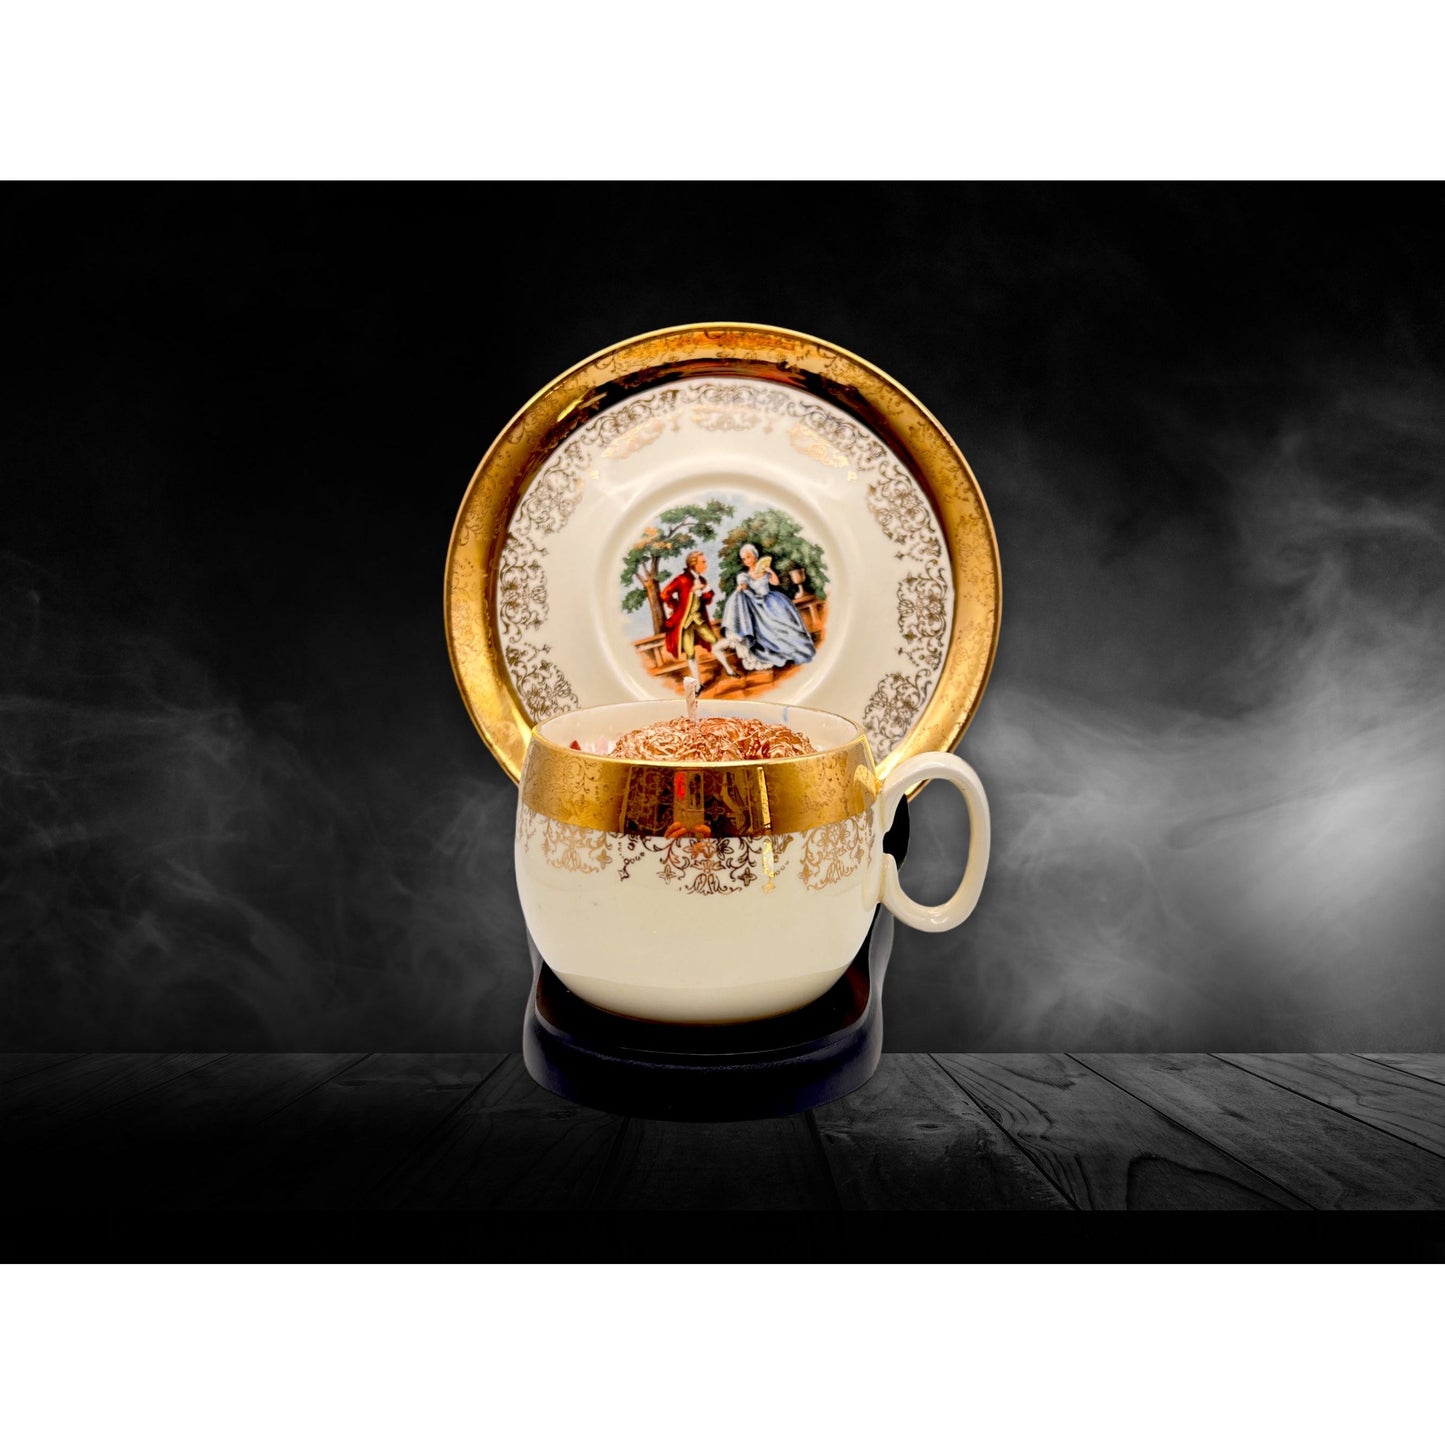 “George and Martha” Sabin Vintage Teacup Candle